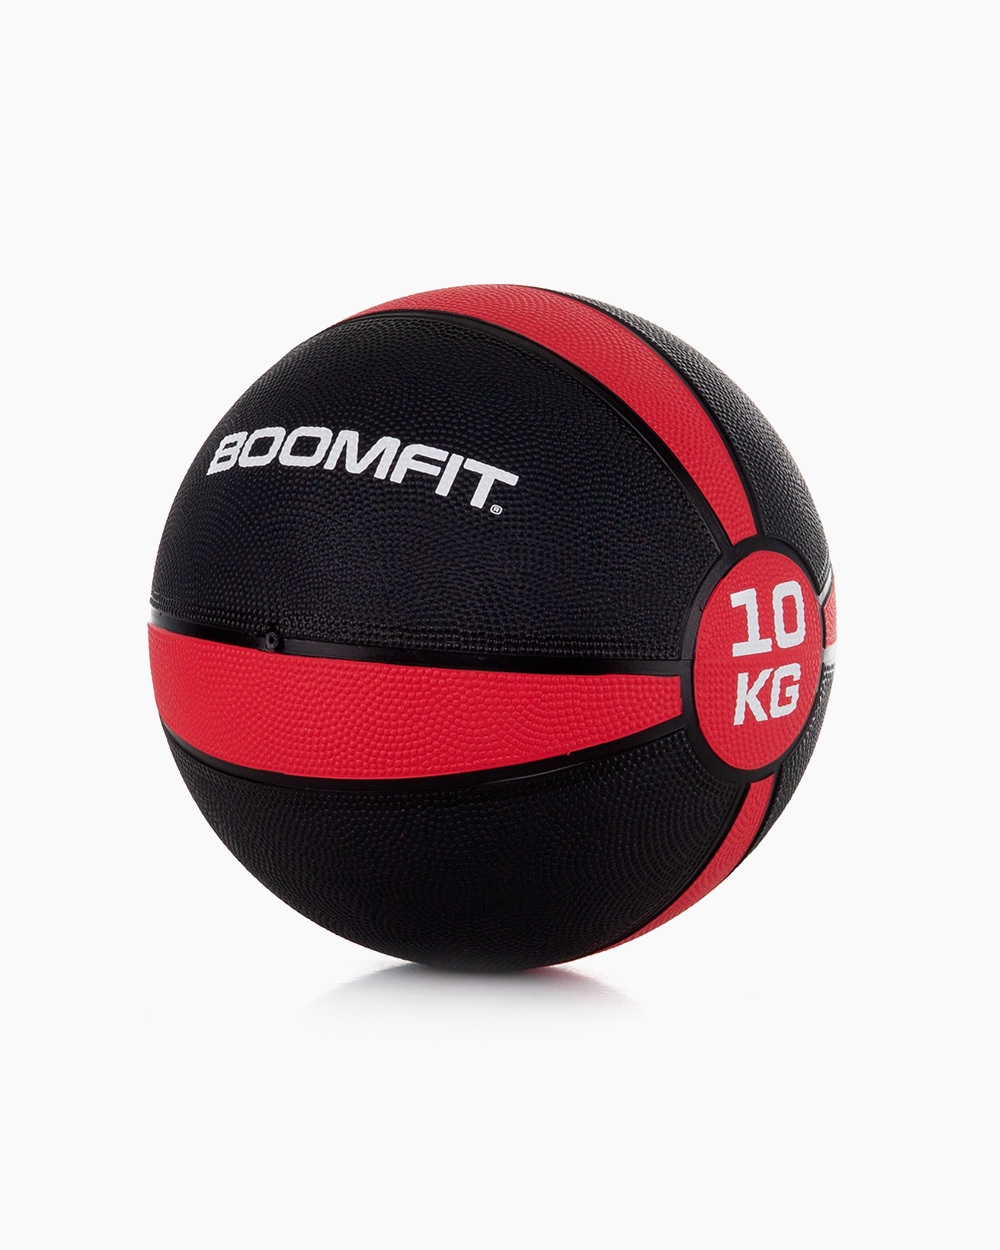 Balón Medicinal Boomfit 10kg - Balón Medicinal 10kg - Boomfit  MKP